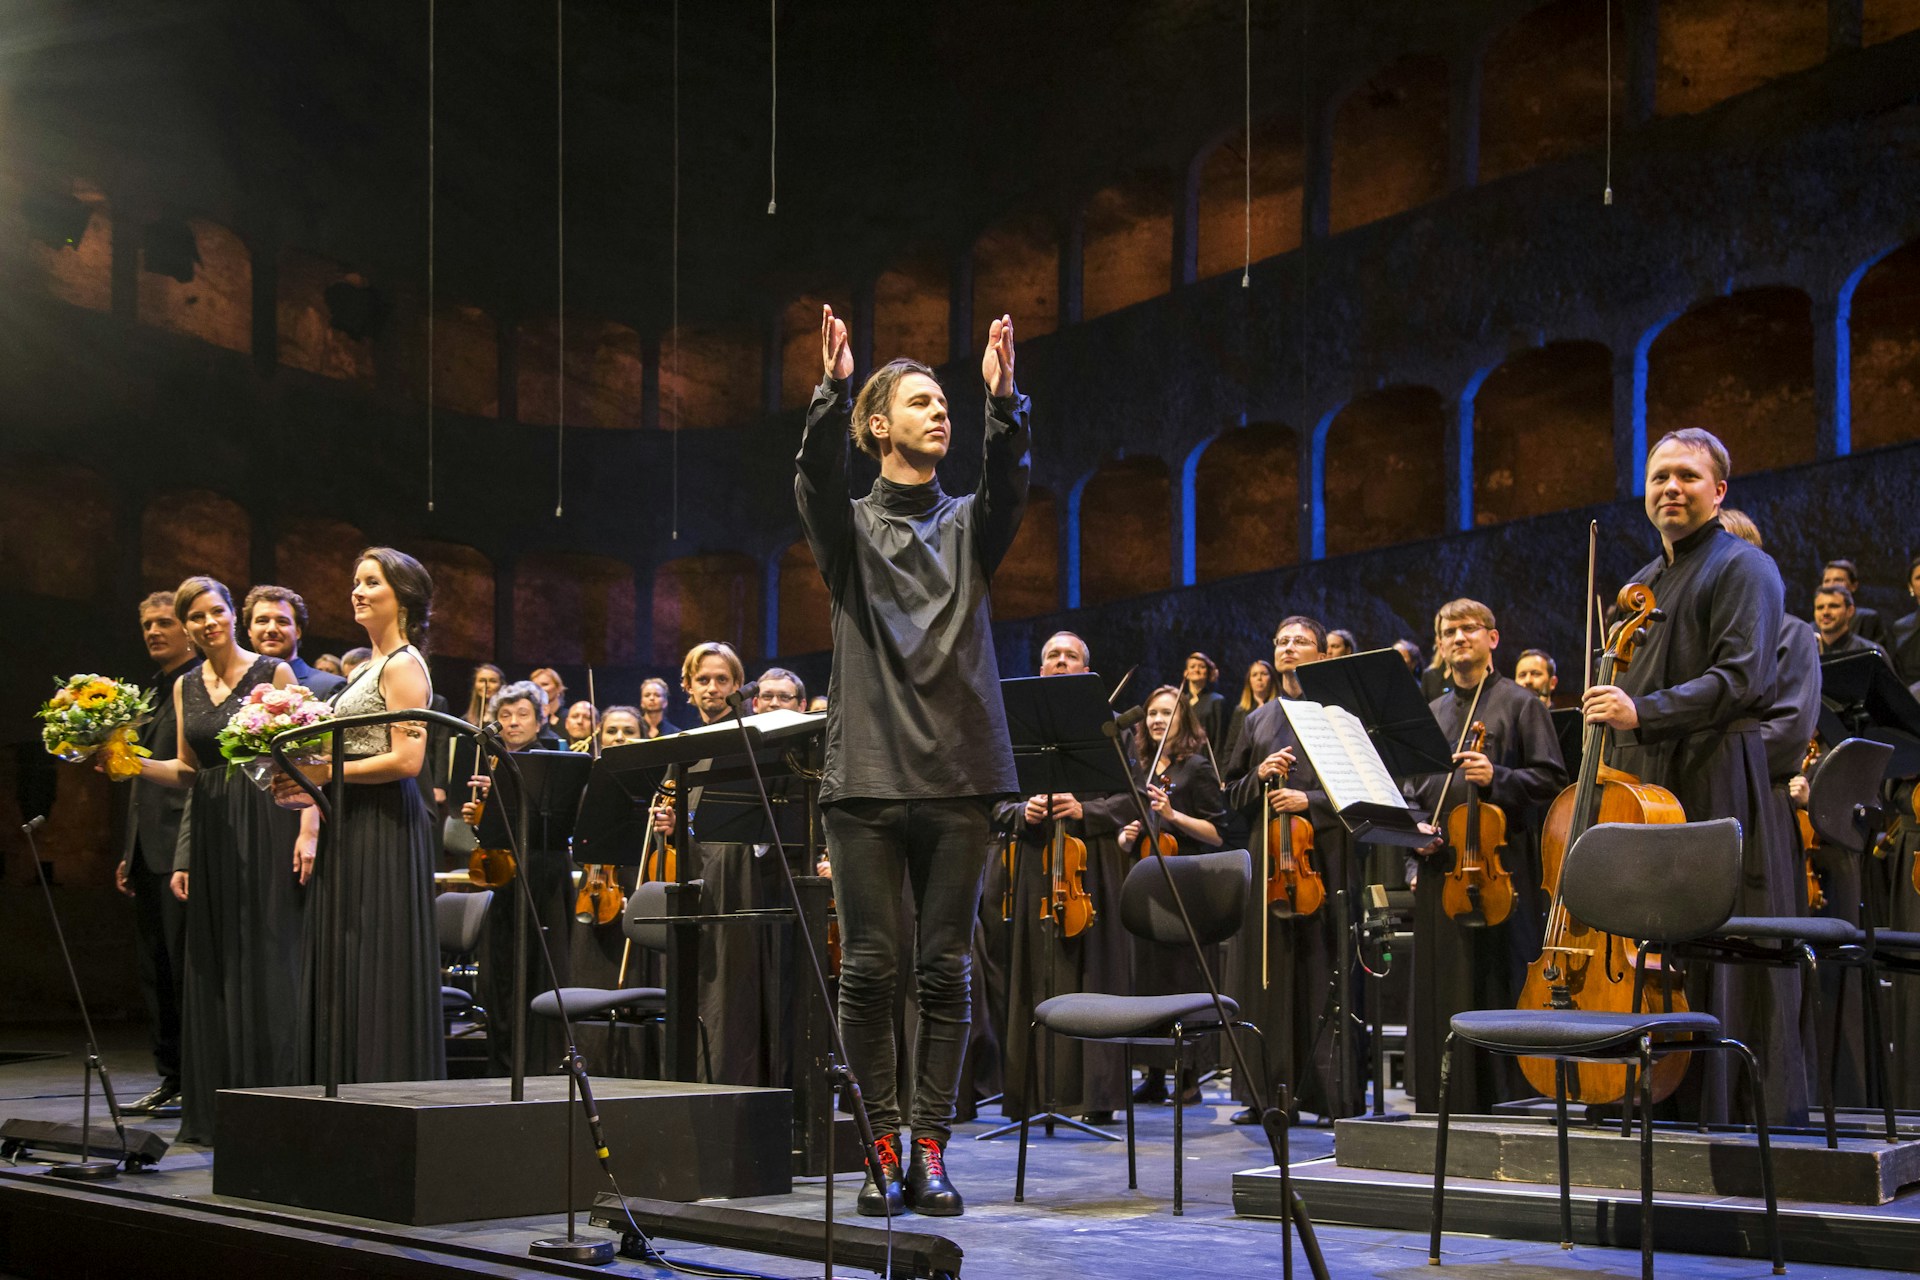 Concerto de Páscoa - Requiem de Mozart  Orquestra Metropolitana de Lisboa  - Viral Agenda